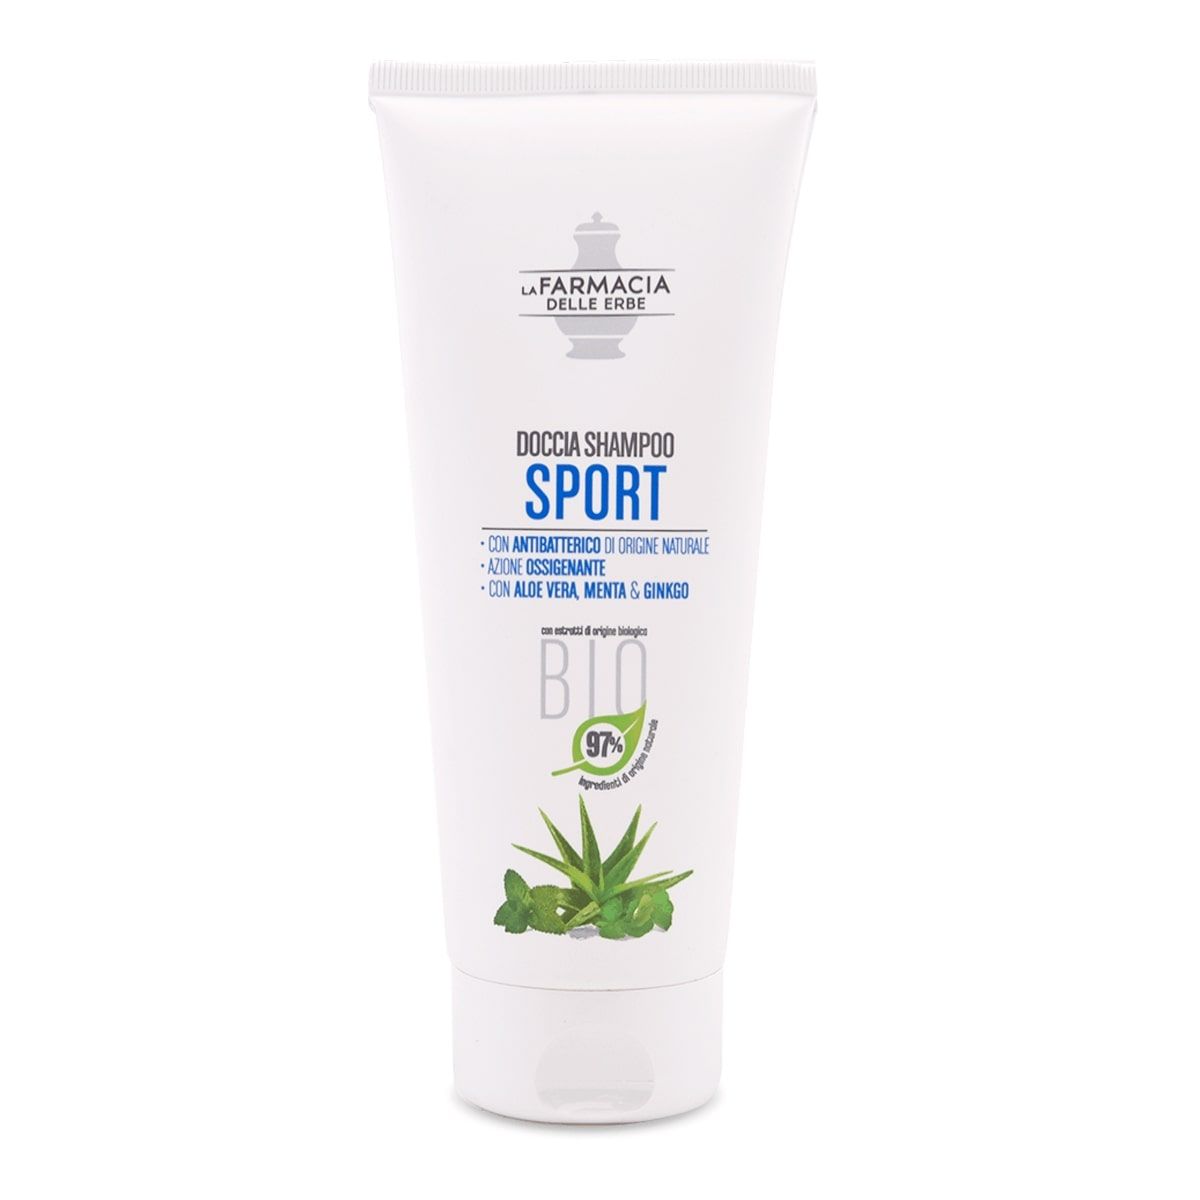 Sports Shampoo and Shower Gel